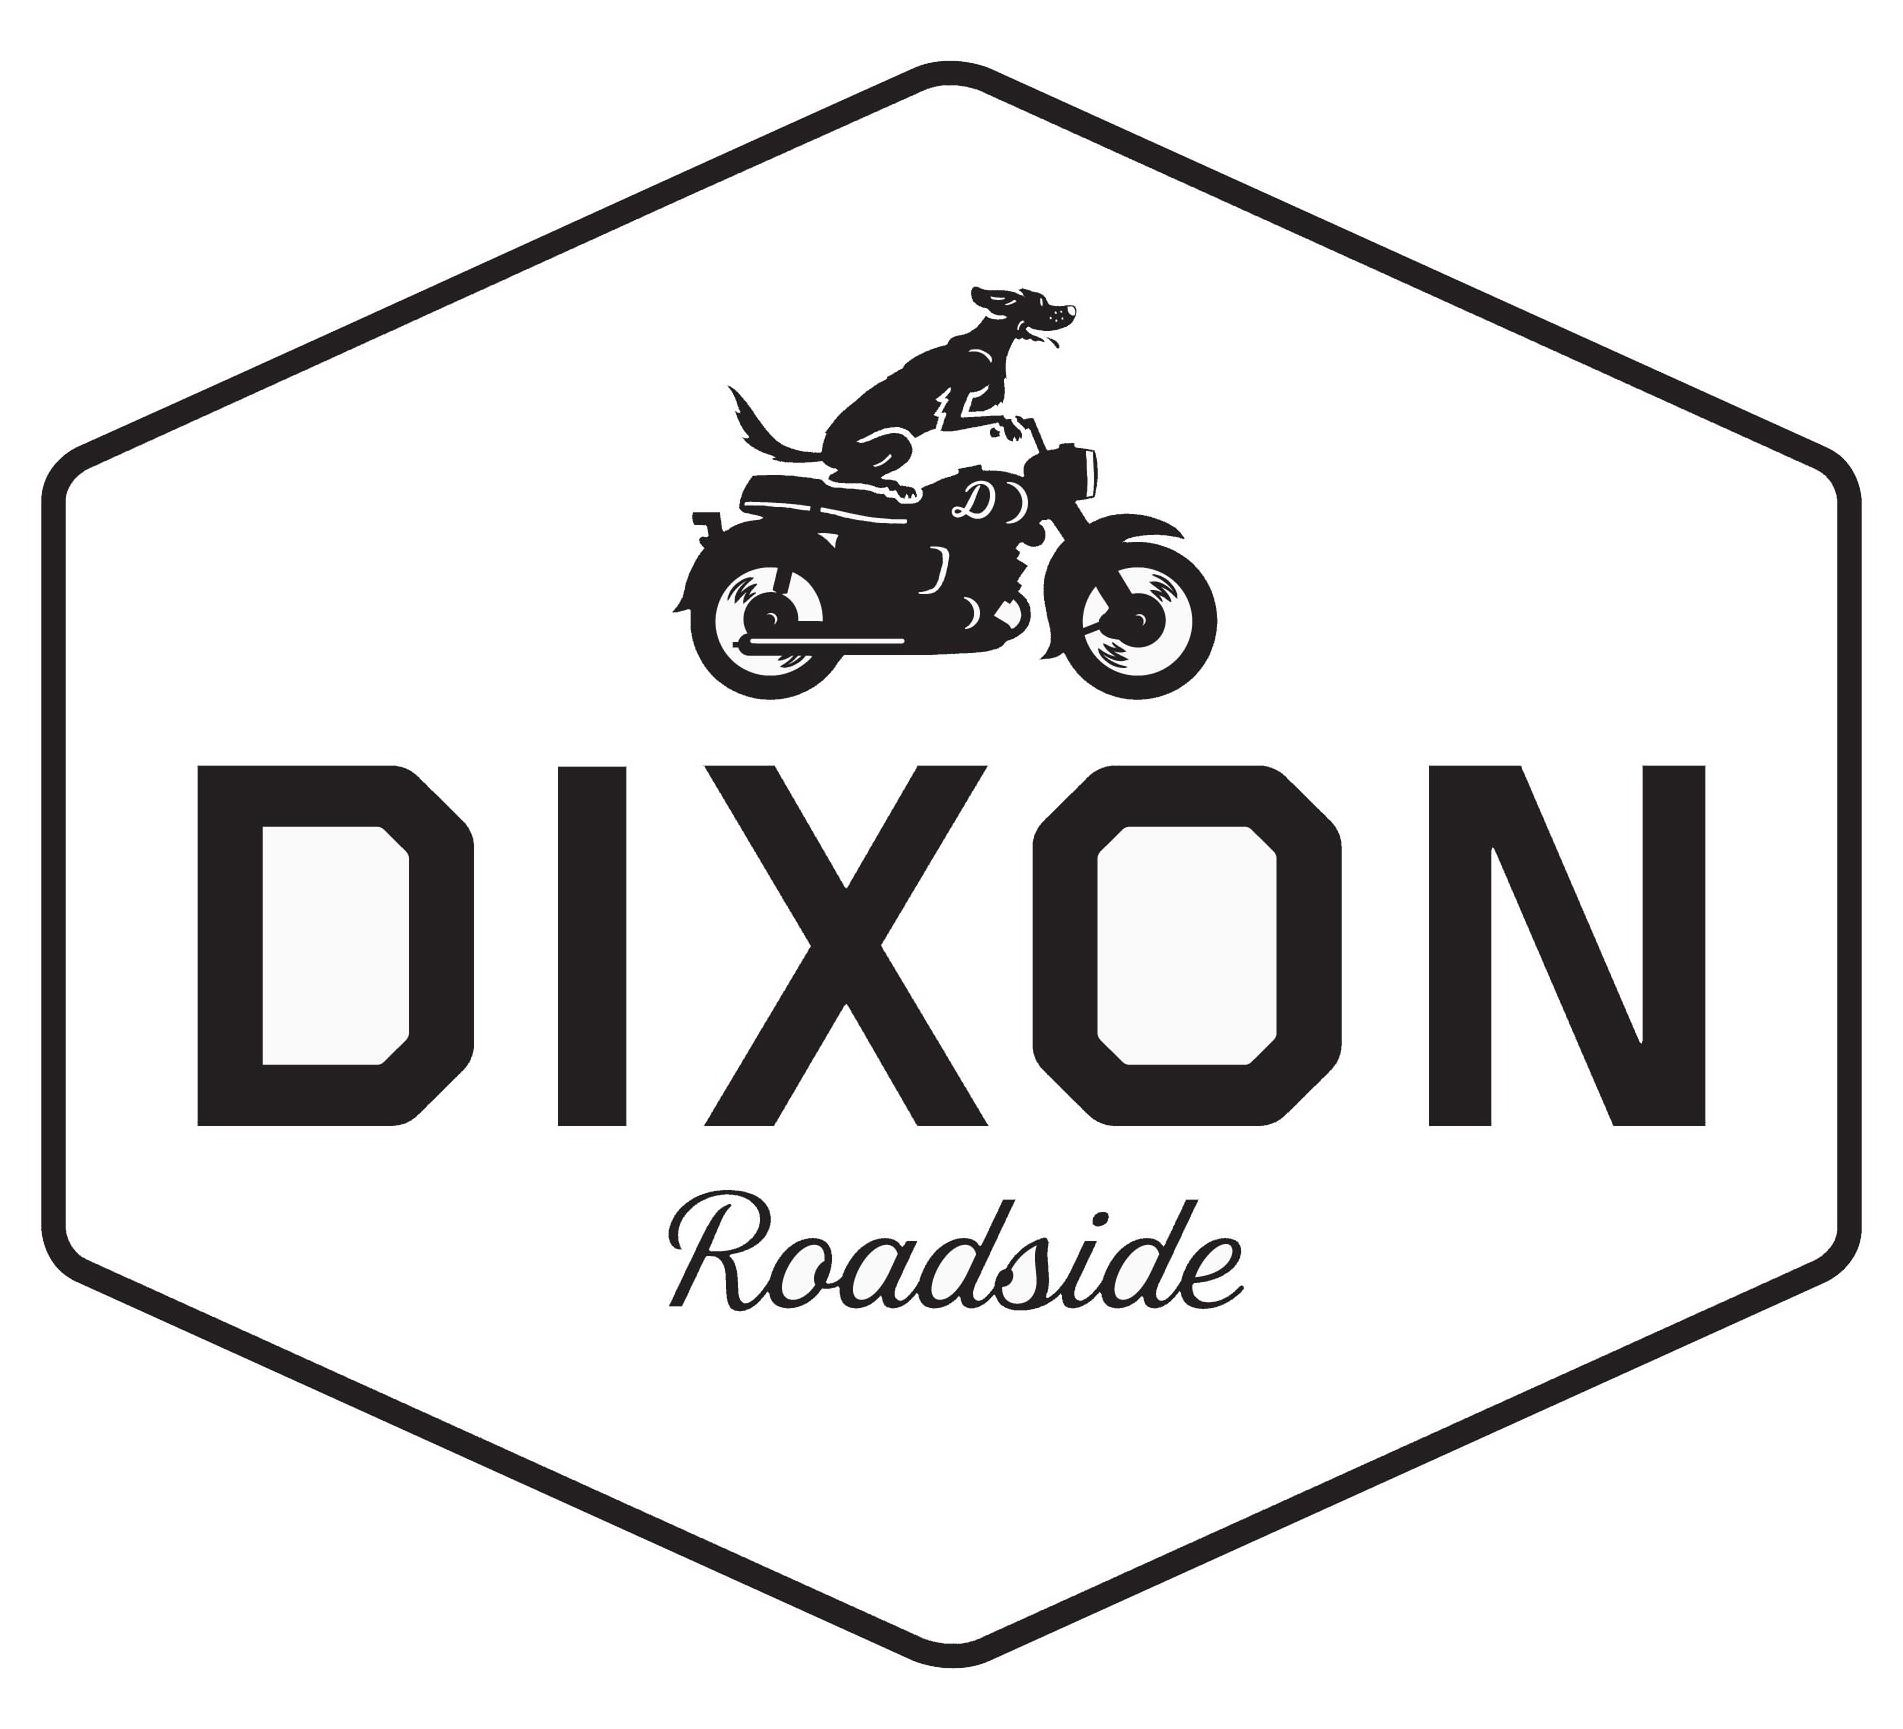 DIXON ROADSIDE